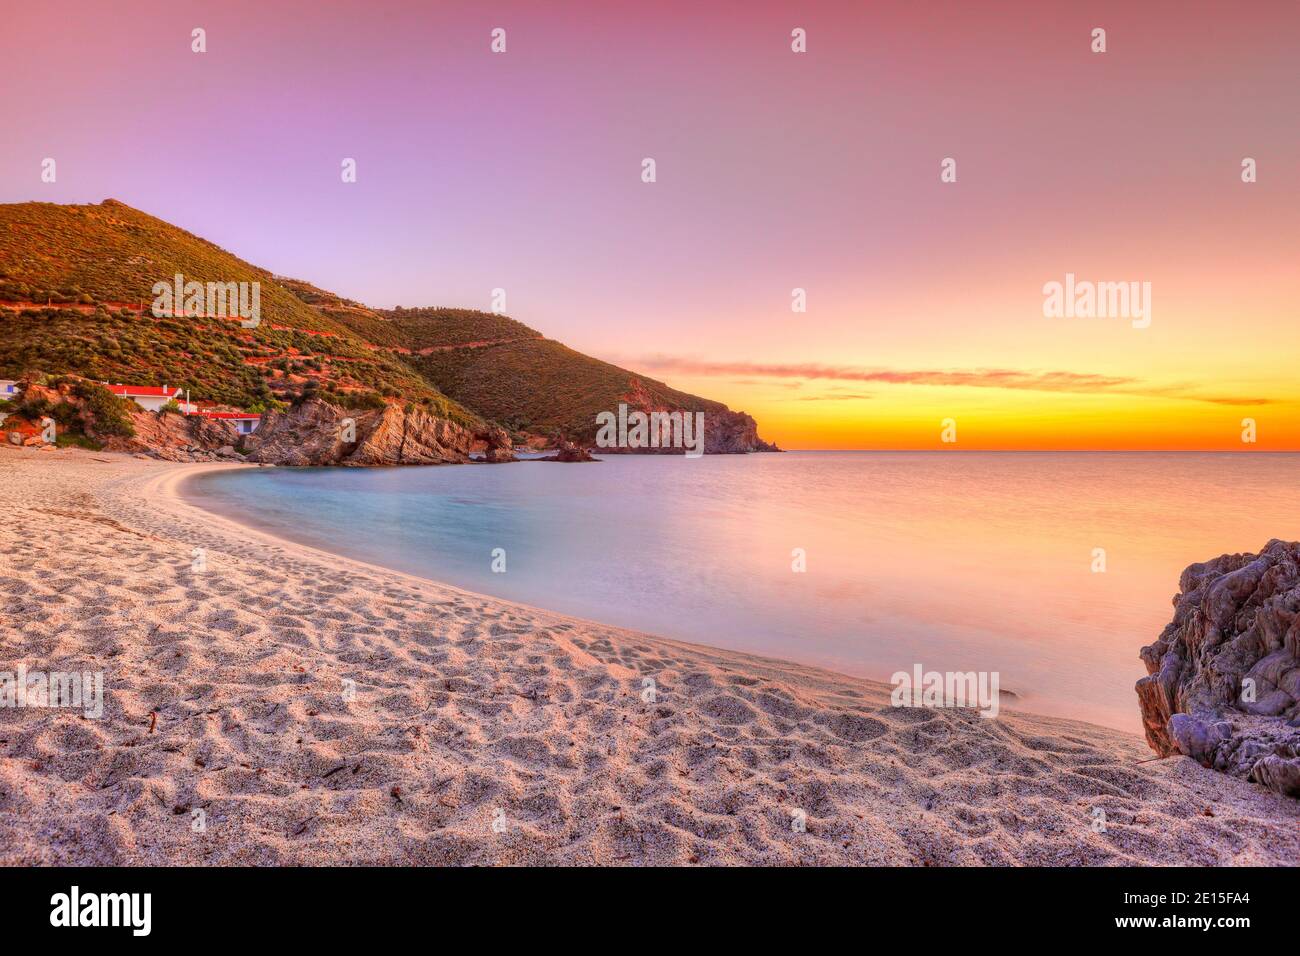 The sunrise at the beach Kalamos in Evia, Greece Stock Photo